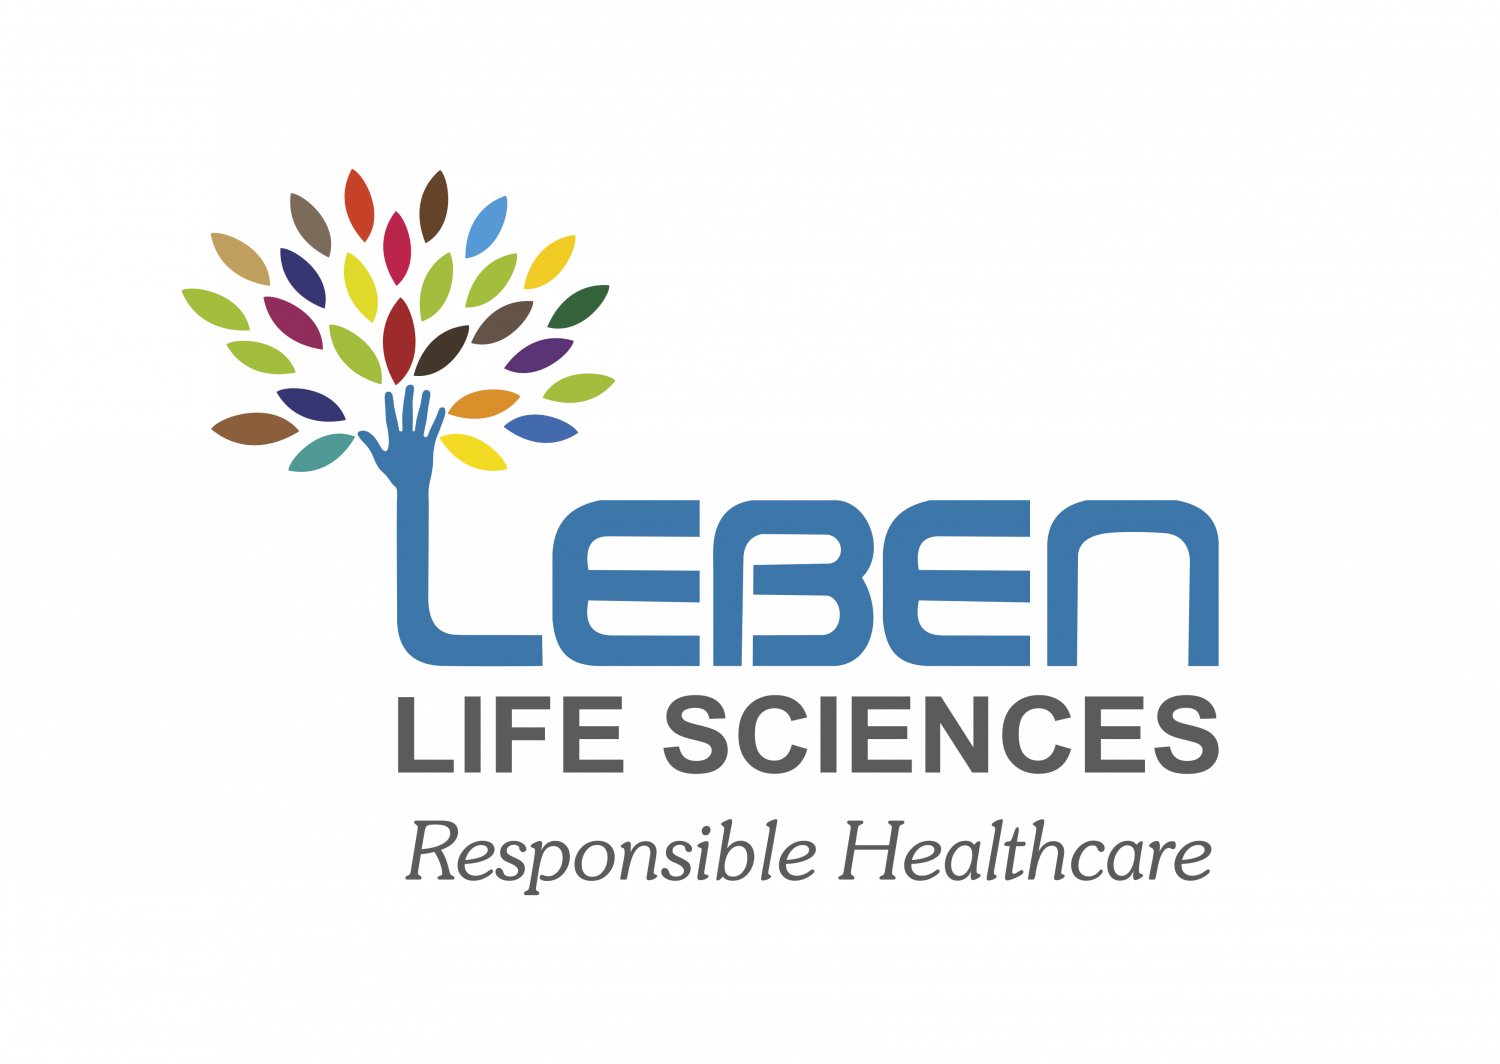 Leben Life Science  Pvt. Ltd.